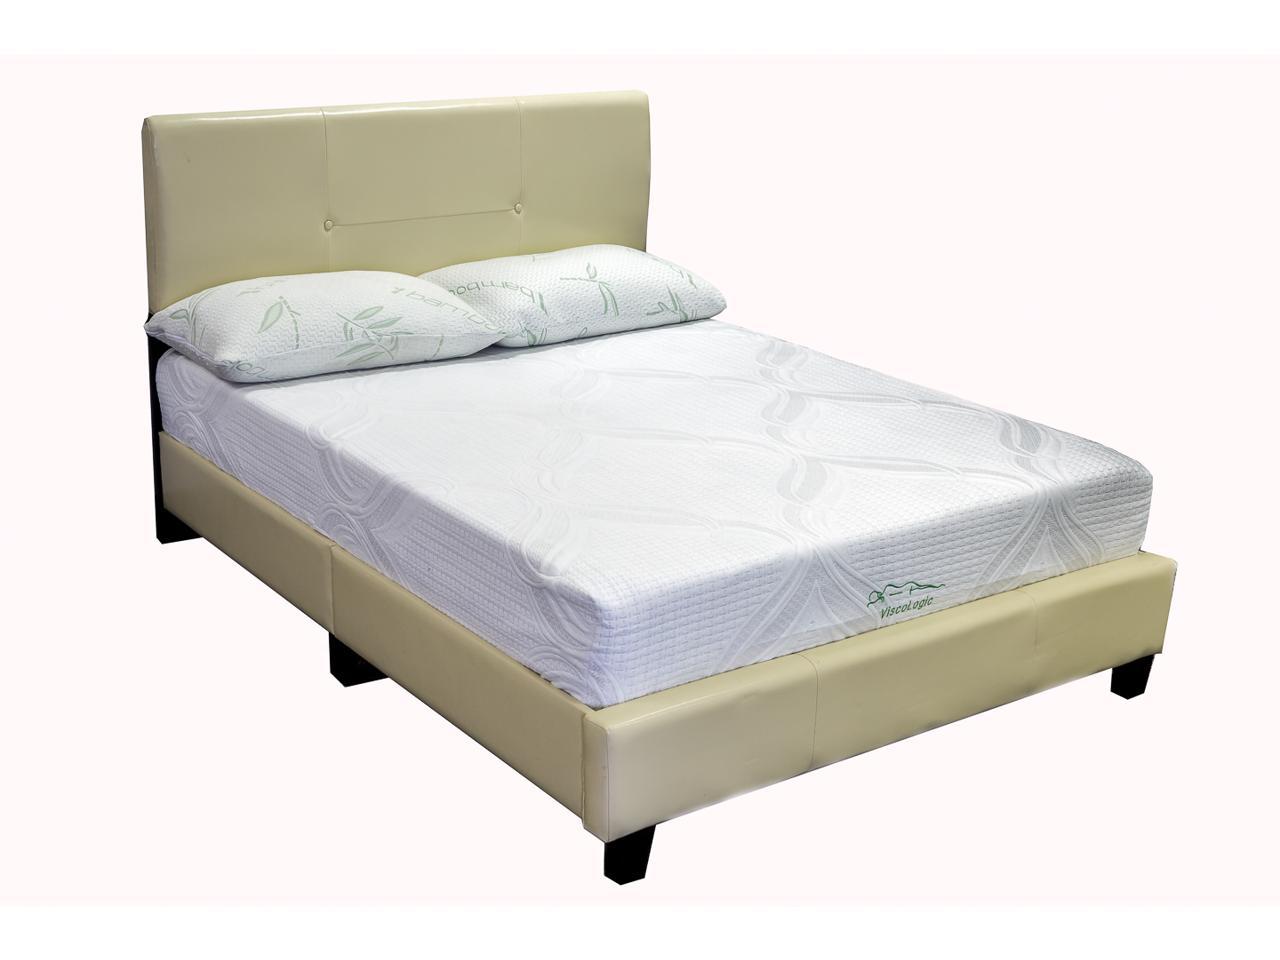 viscologic memory foam mattress review